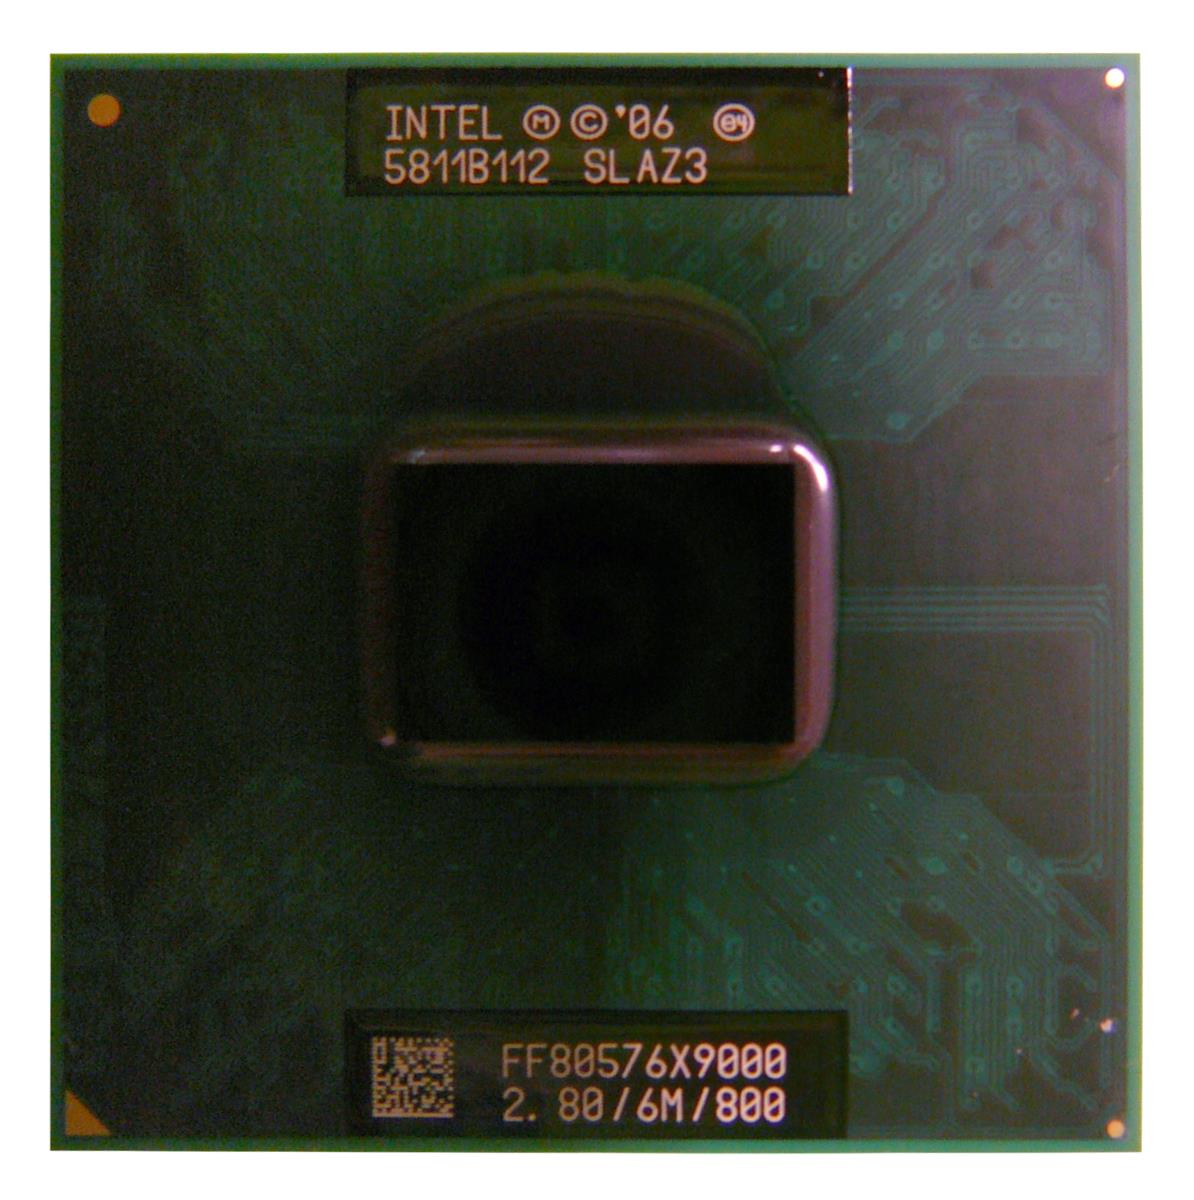 SLAZ3 Intel Core 2 Extreme X9000 Dual-Core 2.80GHz 800MHz FSB 6MB L2 Cache Socket PGA478 Mobile Processor